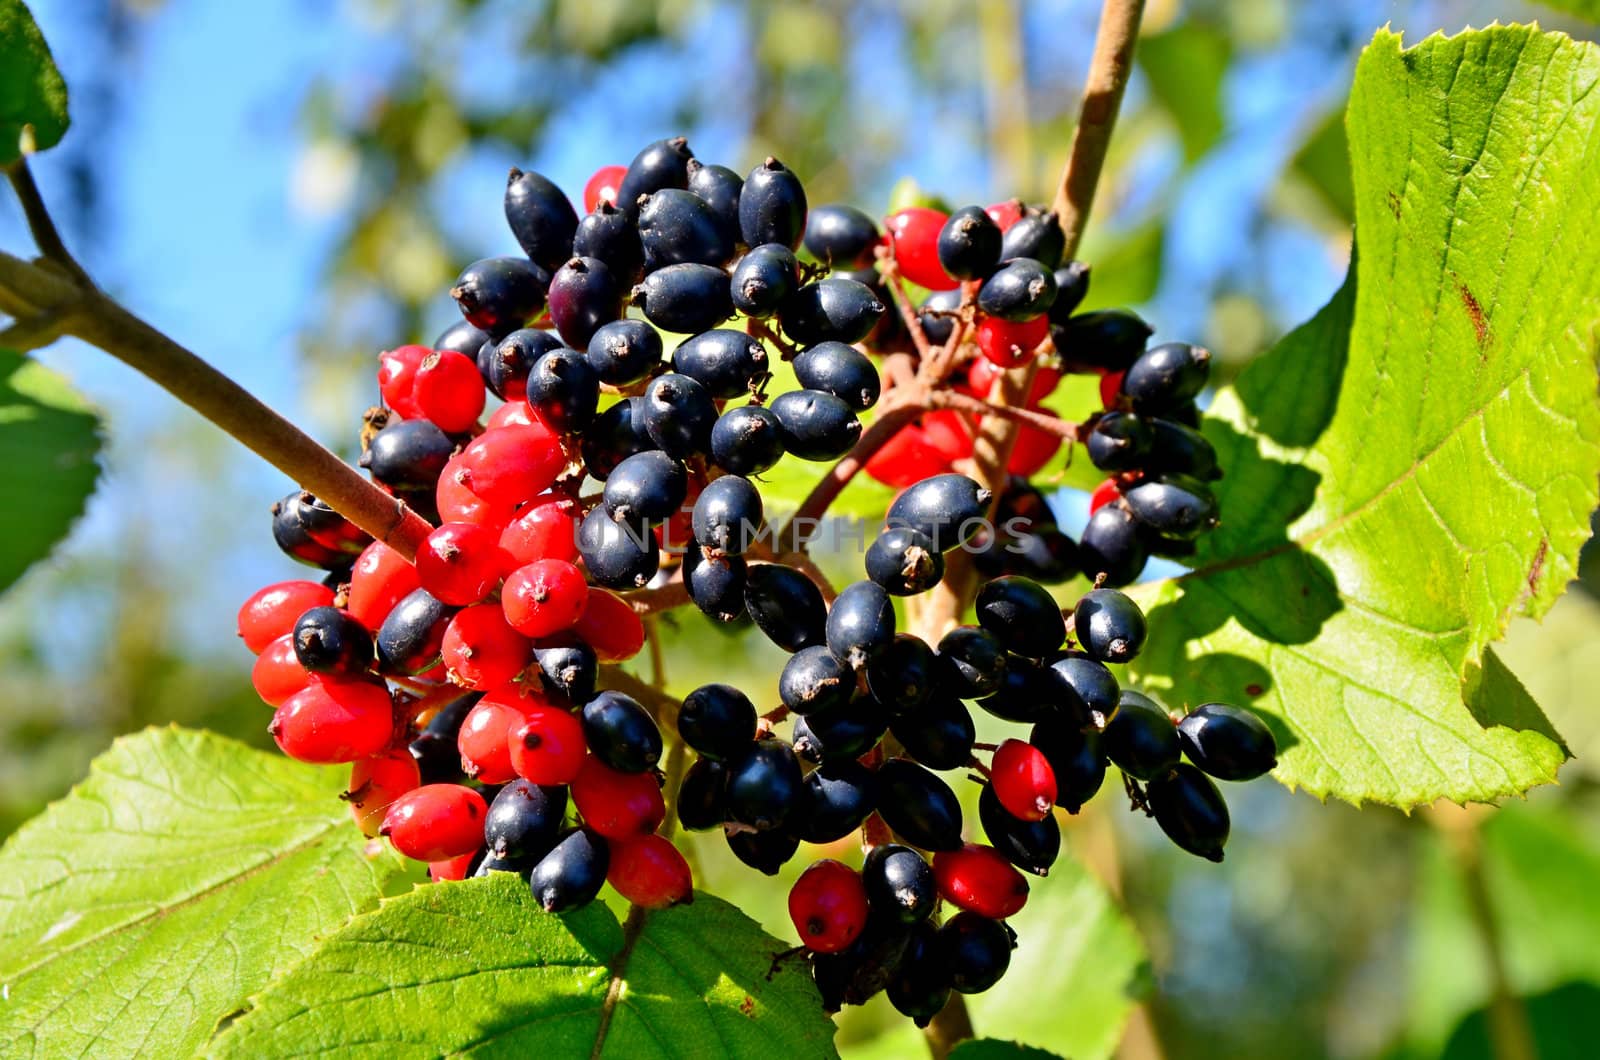 Wood berries by Netti